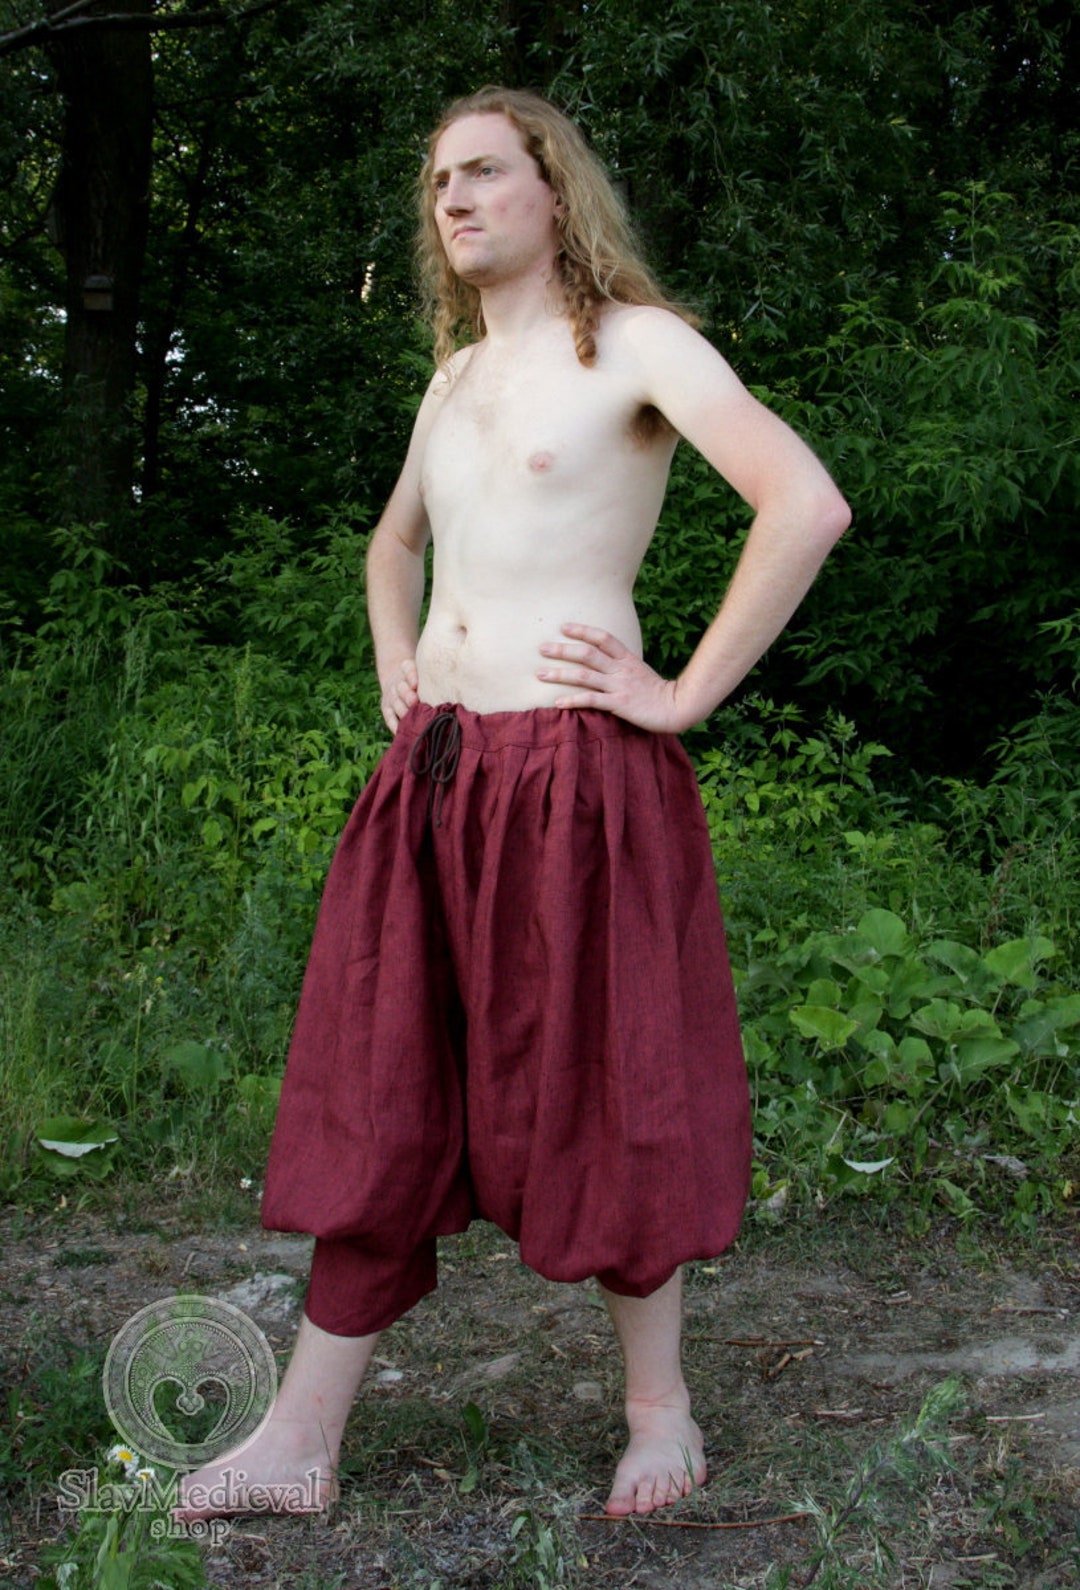 Early Medieval Viking Pasbyxor Linen Baggy Pants/trousers Based on  Historical Pattern for Viking and Slavs Reenactors, Viking Man Costume 